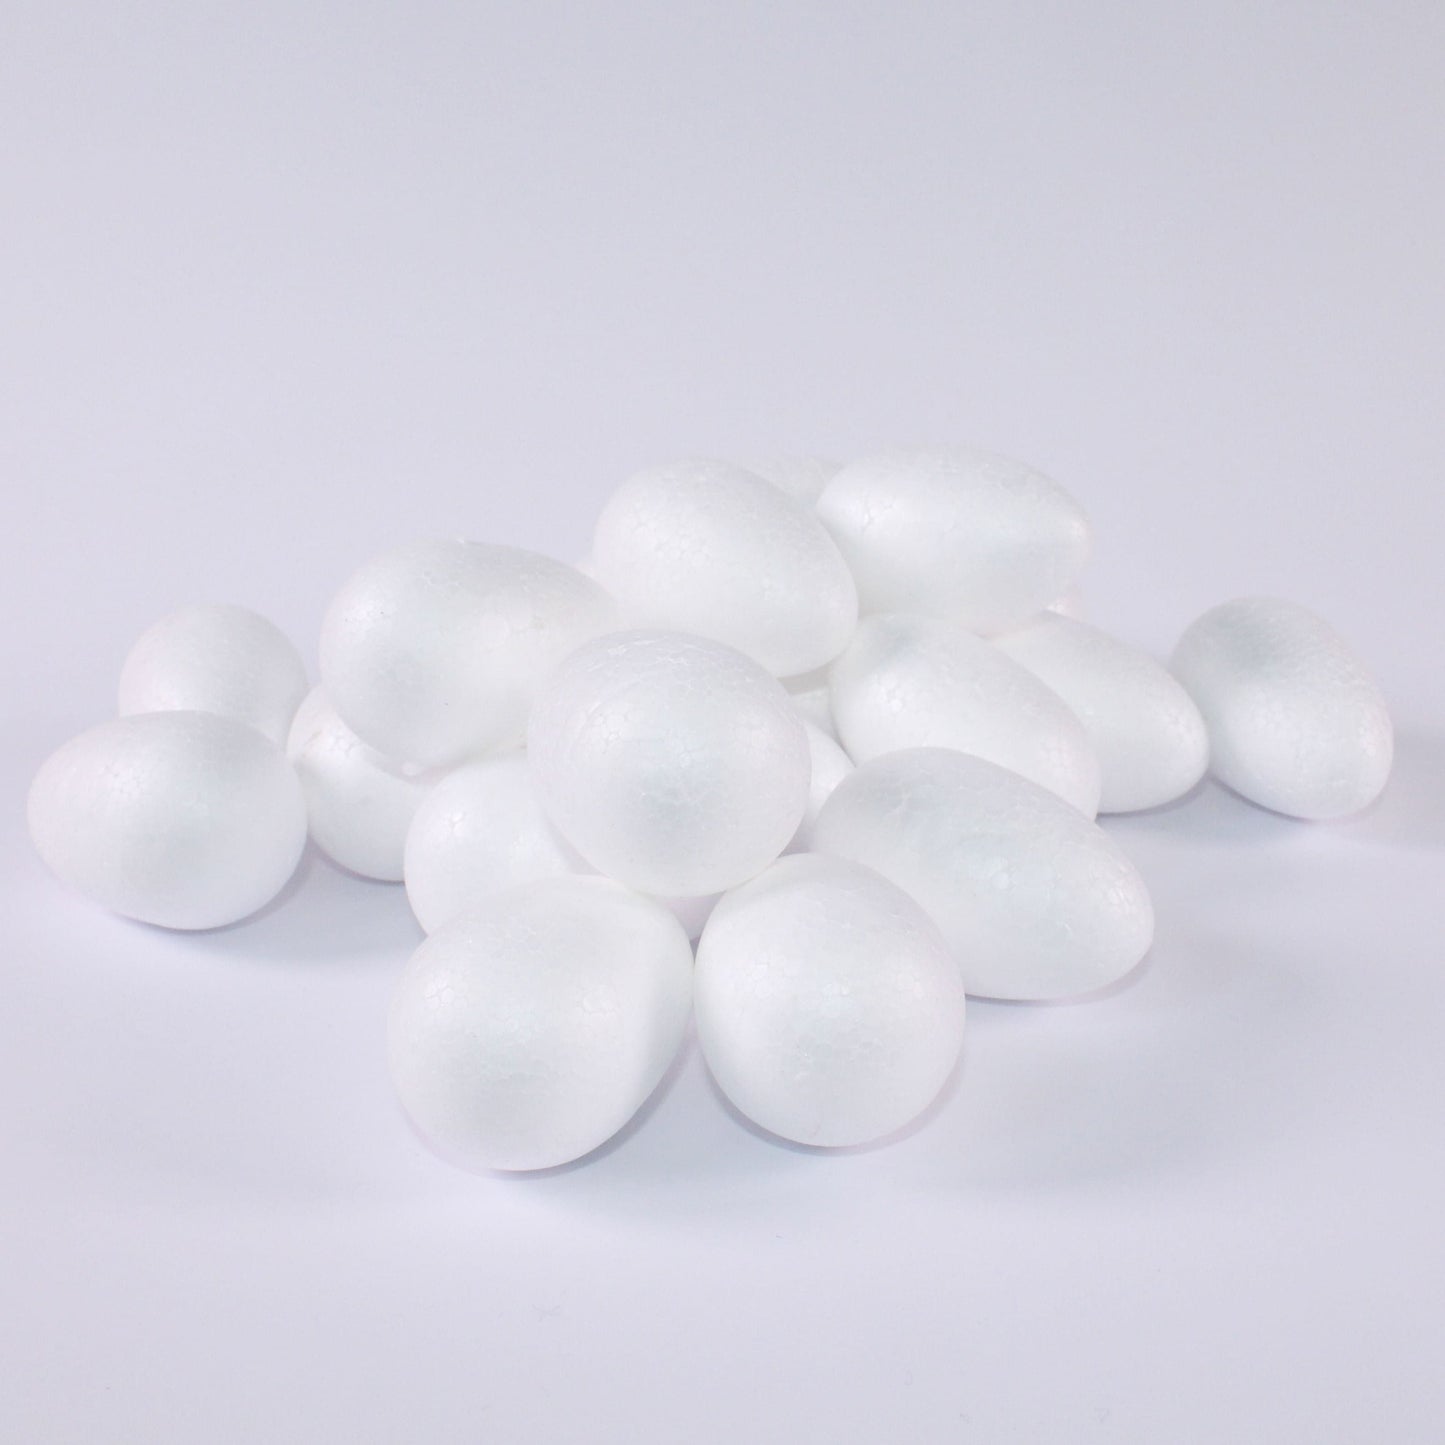 Solid Polystyrene Eggs